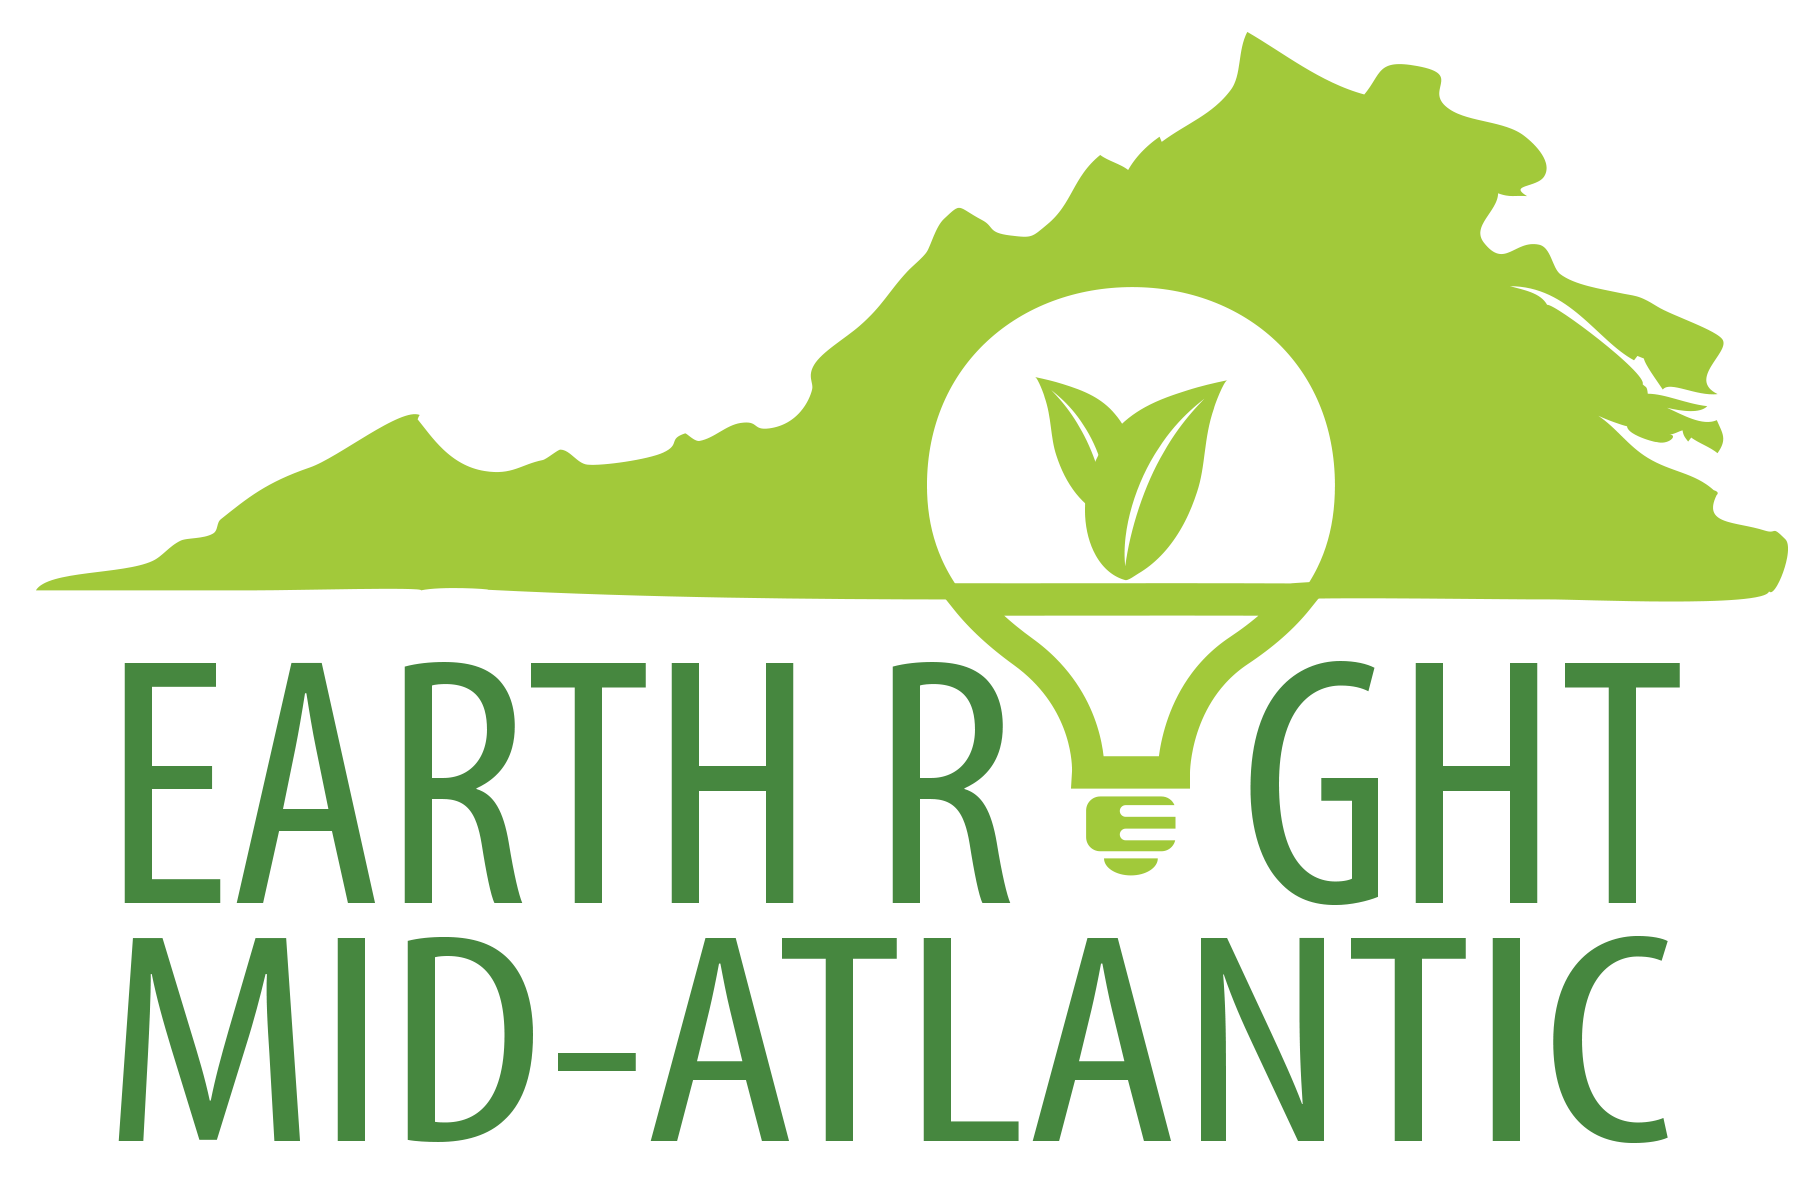 Earth Right Mid-Atlantic logo